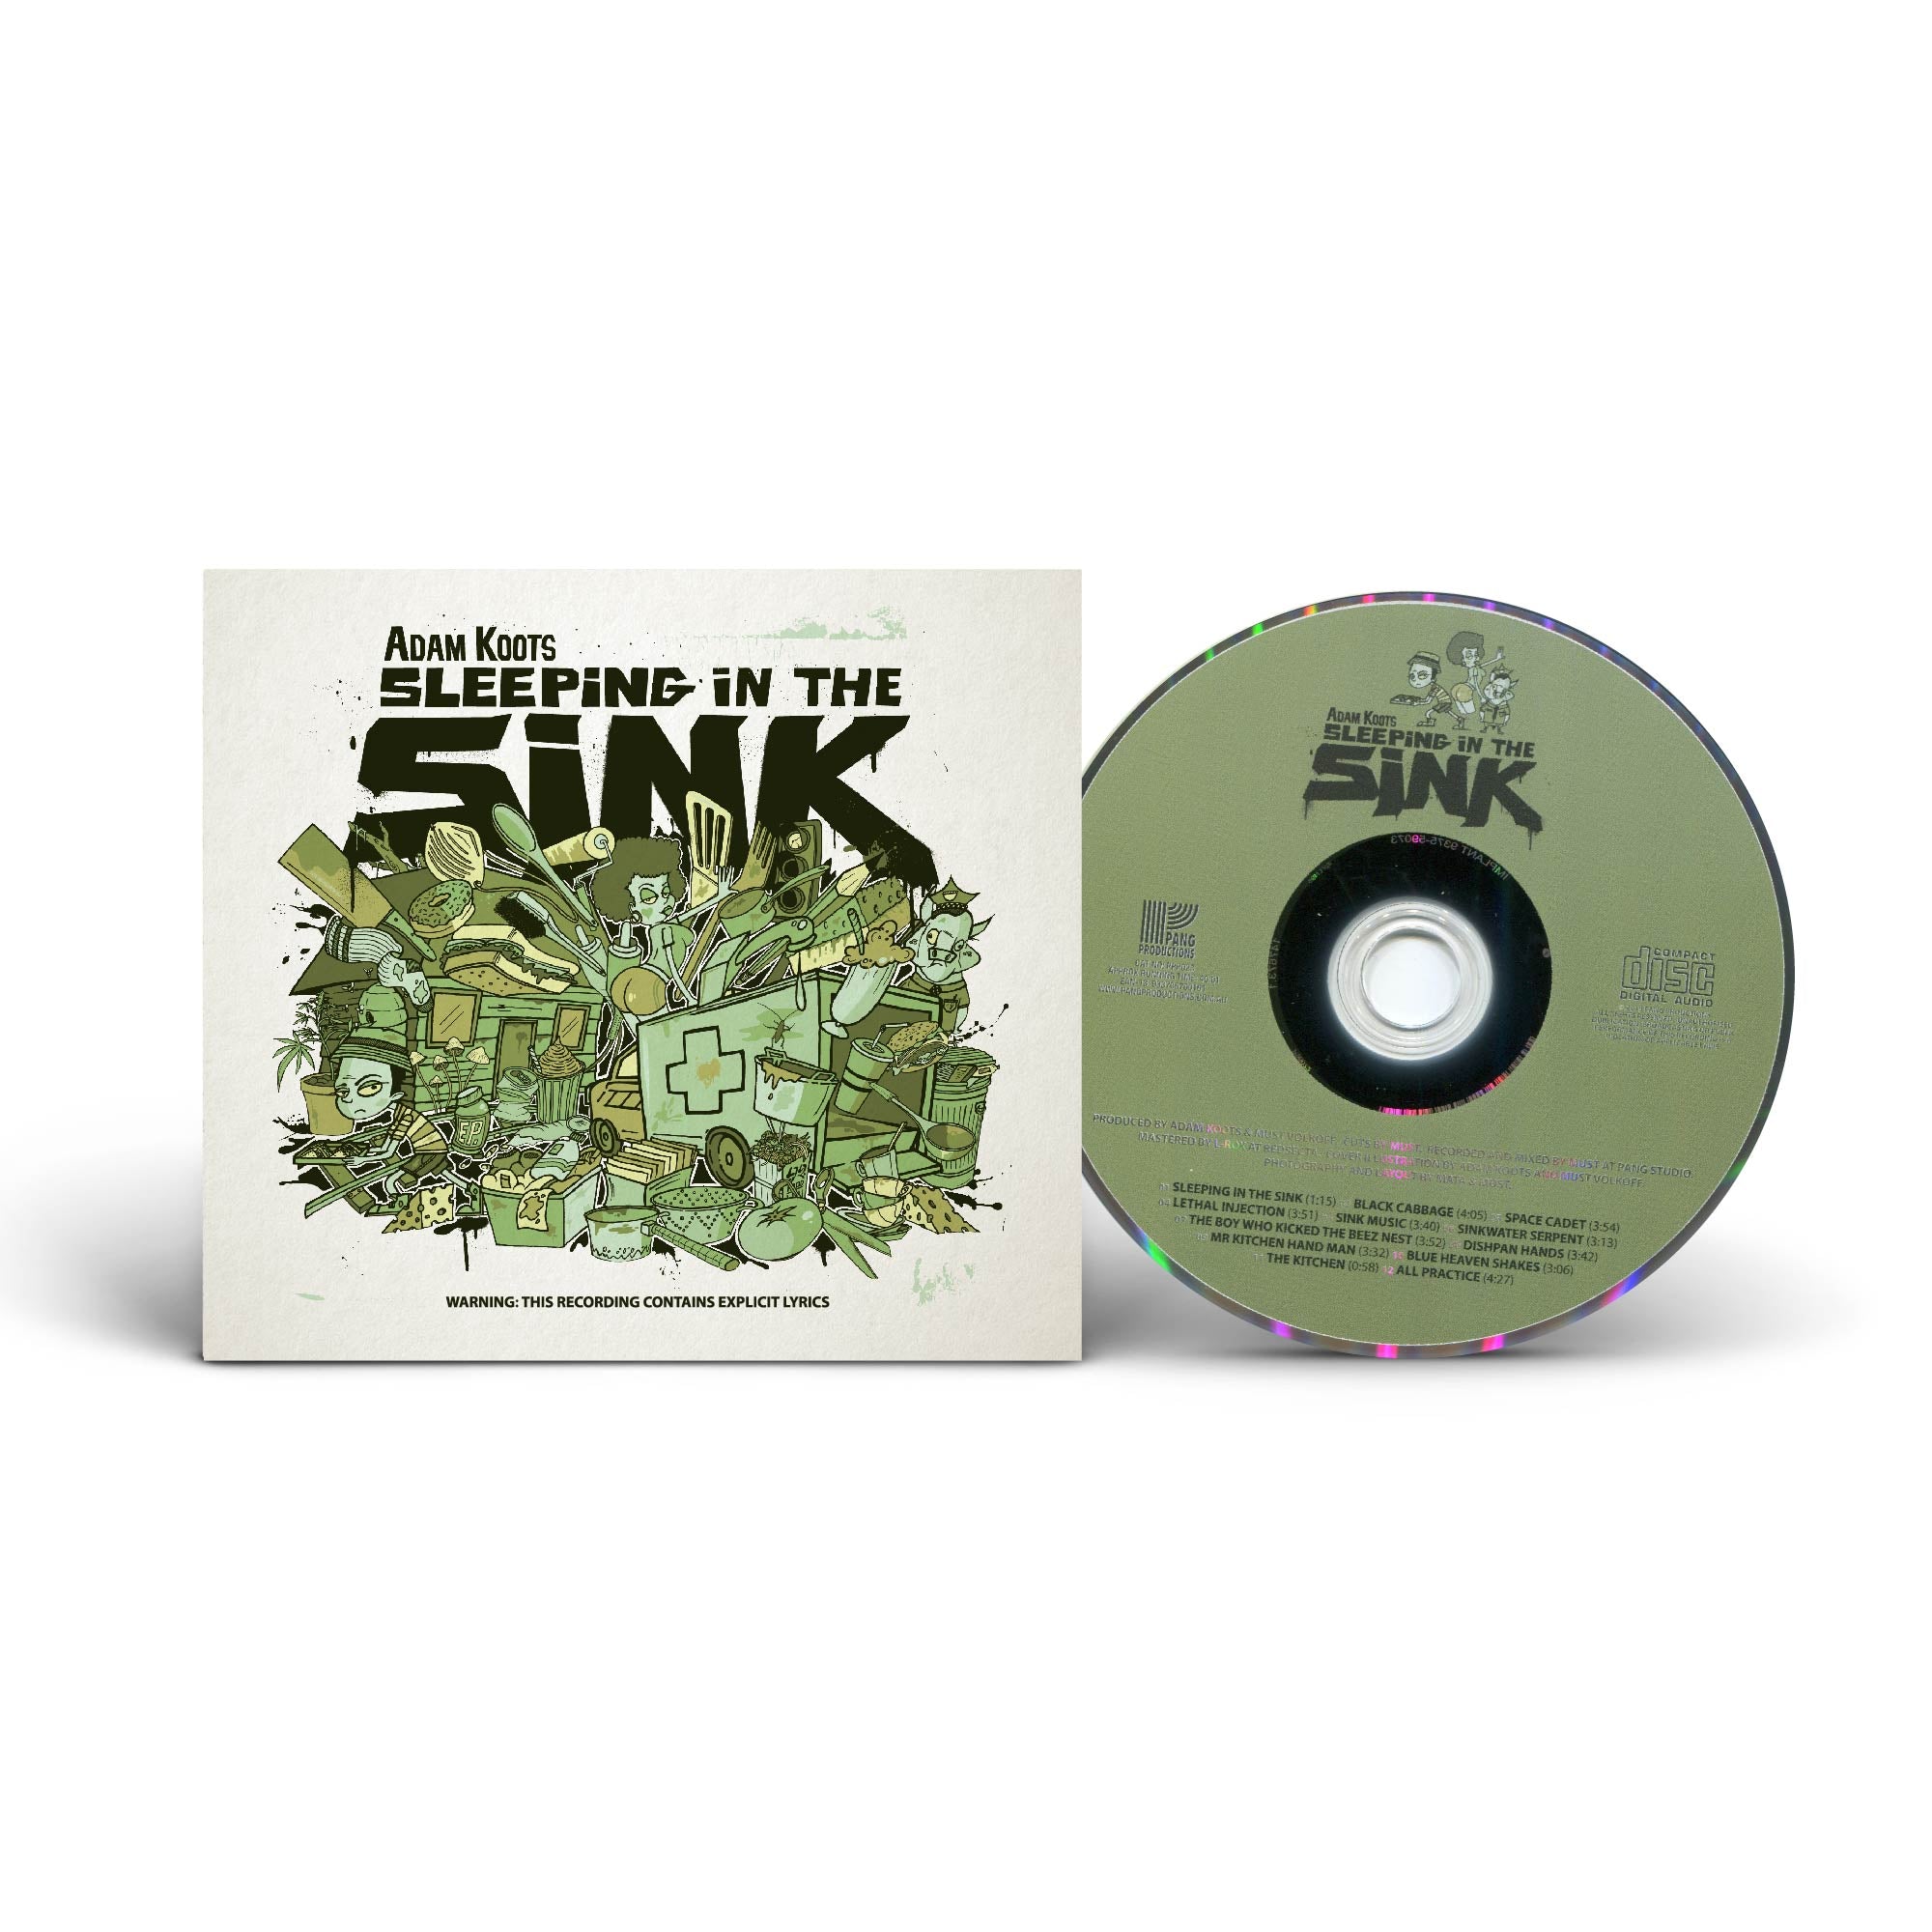 Adam Koots - Sleeping In the Sink (CD)